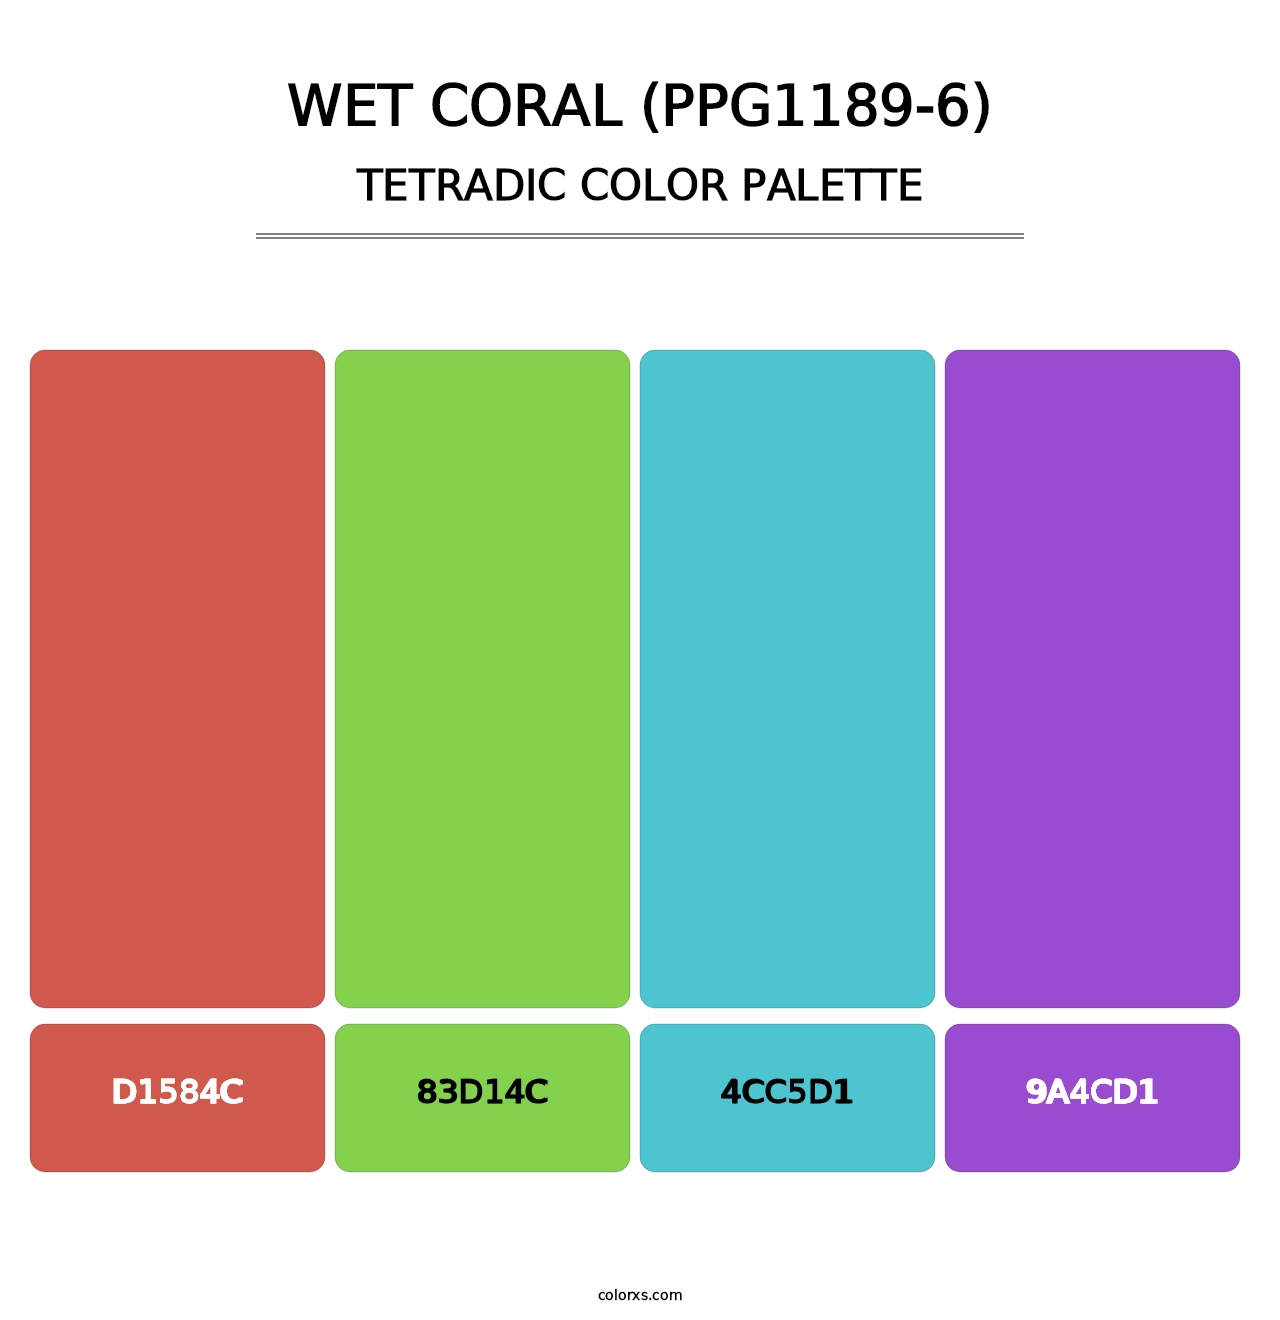 Wet Coral (PPG1189-6) - Tetradic Color Palette